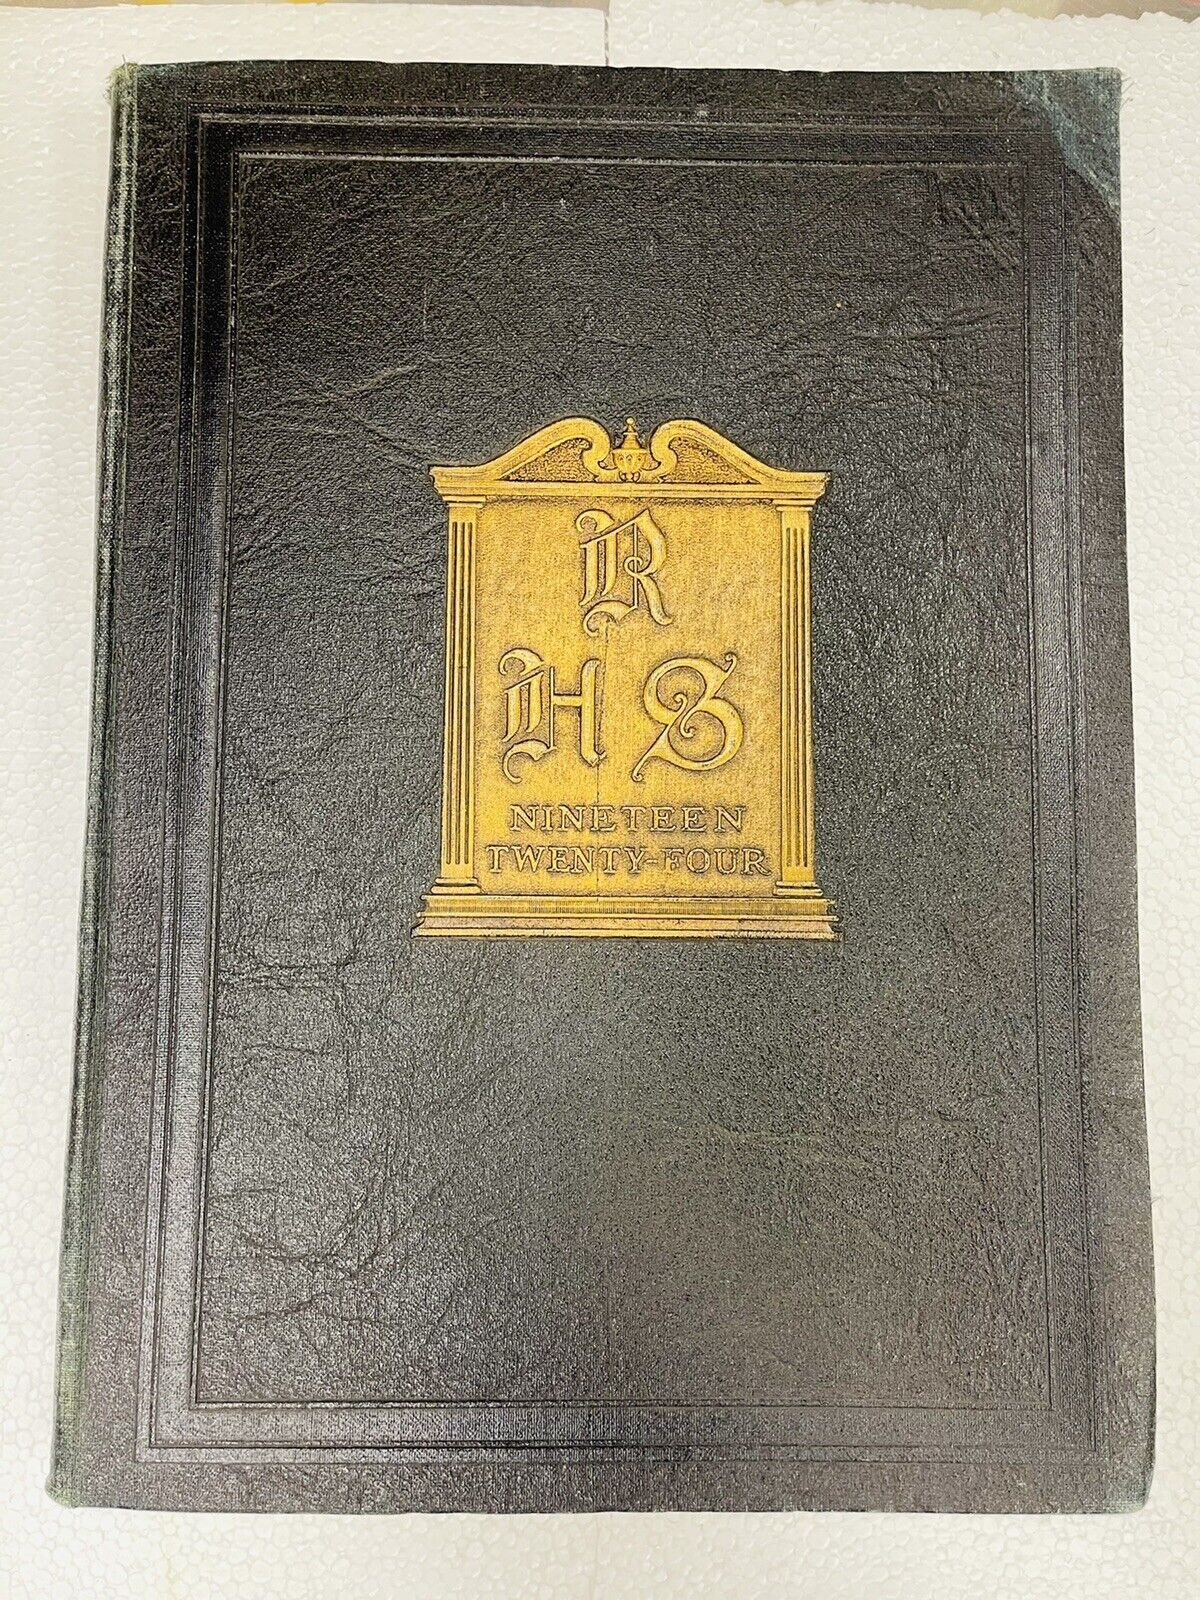 1924 ROCKFORD ILLINOIS HIGH SCHOOL YEARBOOK 